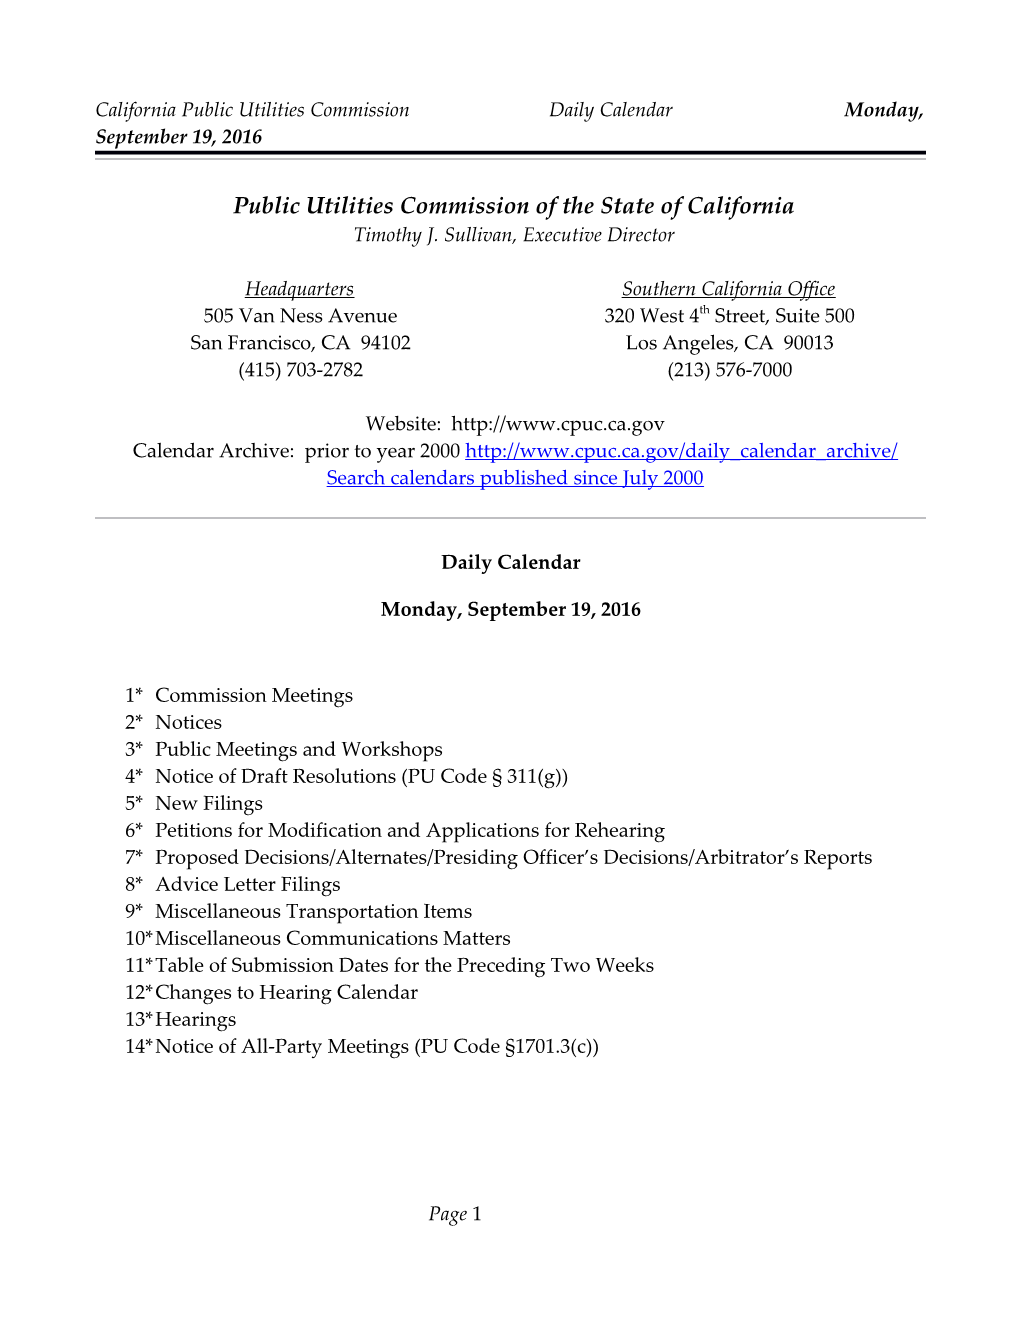 California Public Utilities Commission Daily Calendar Monday, September 19, 2016